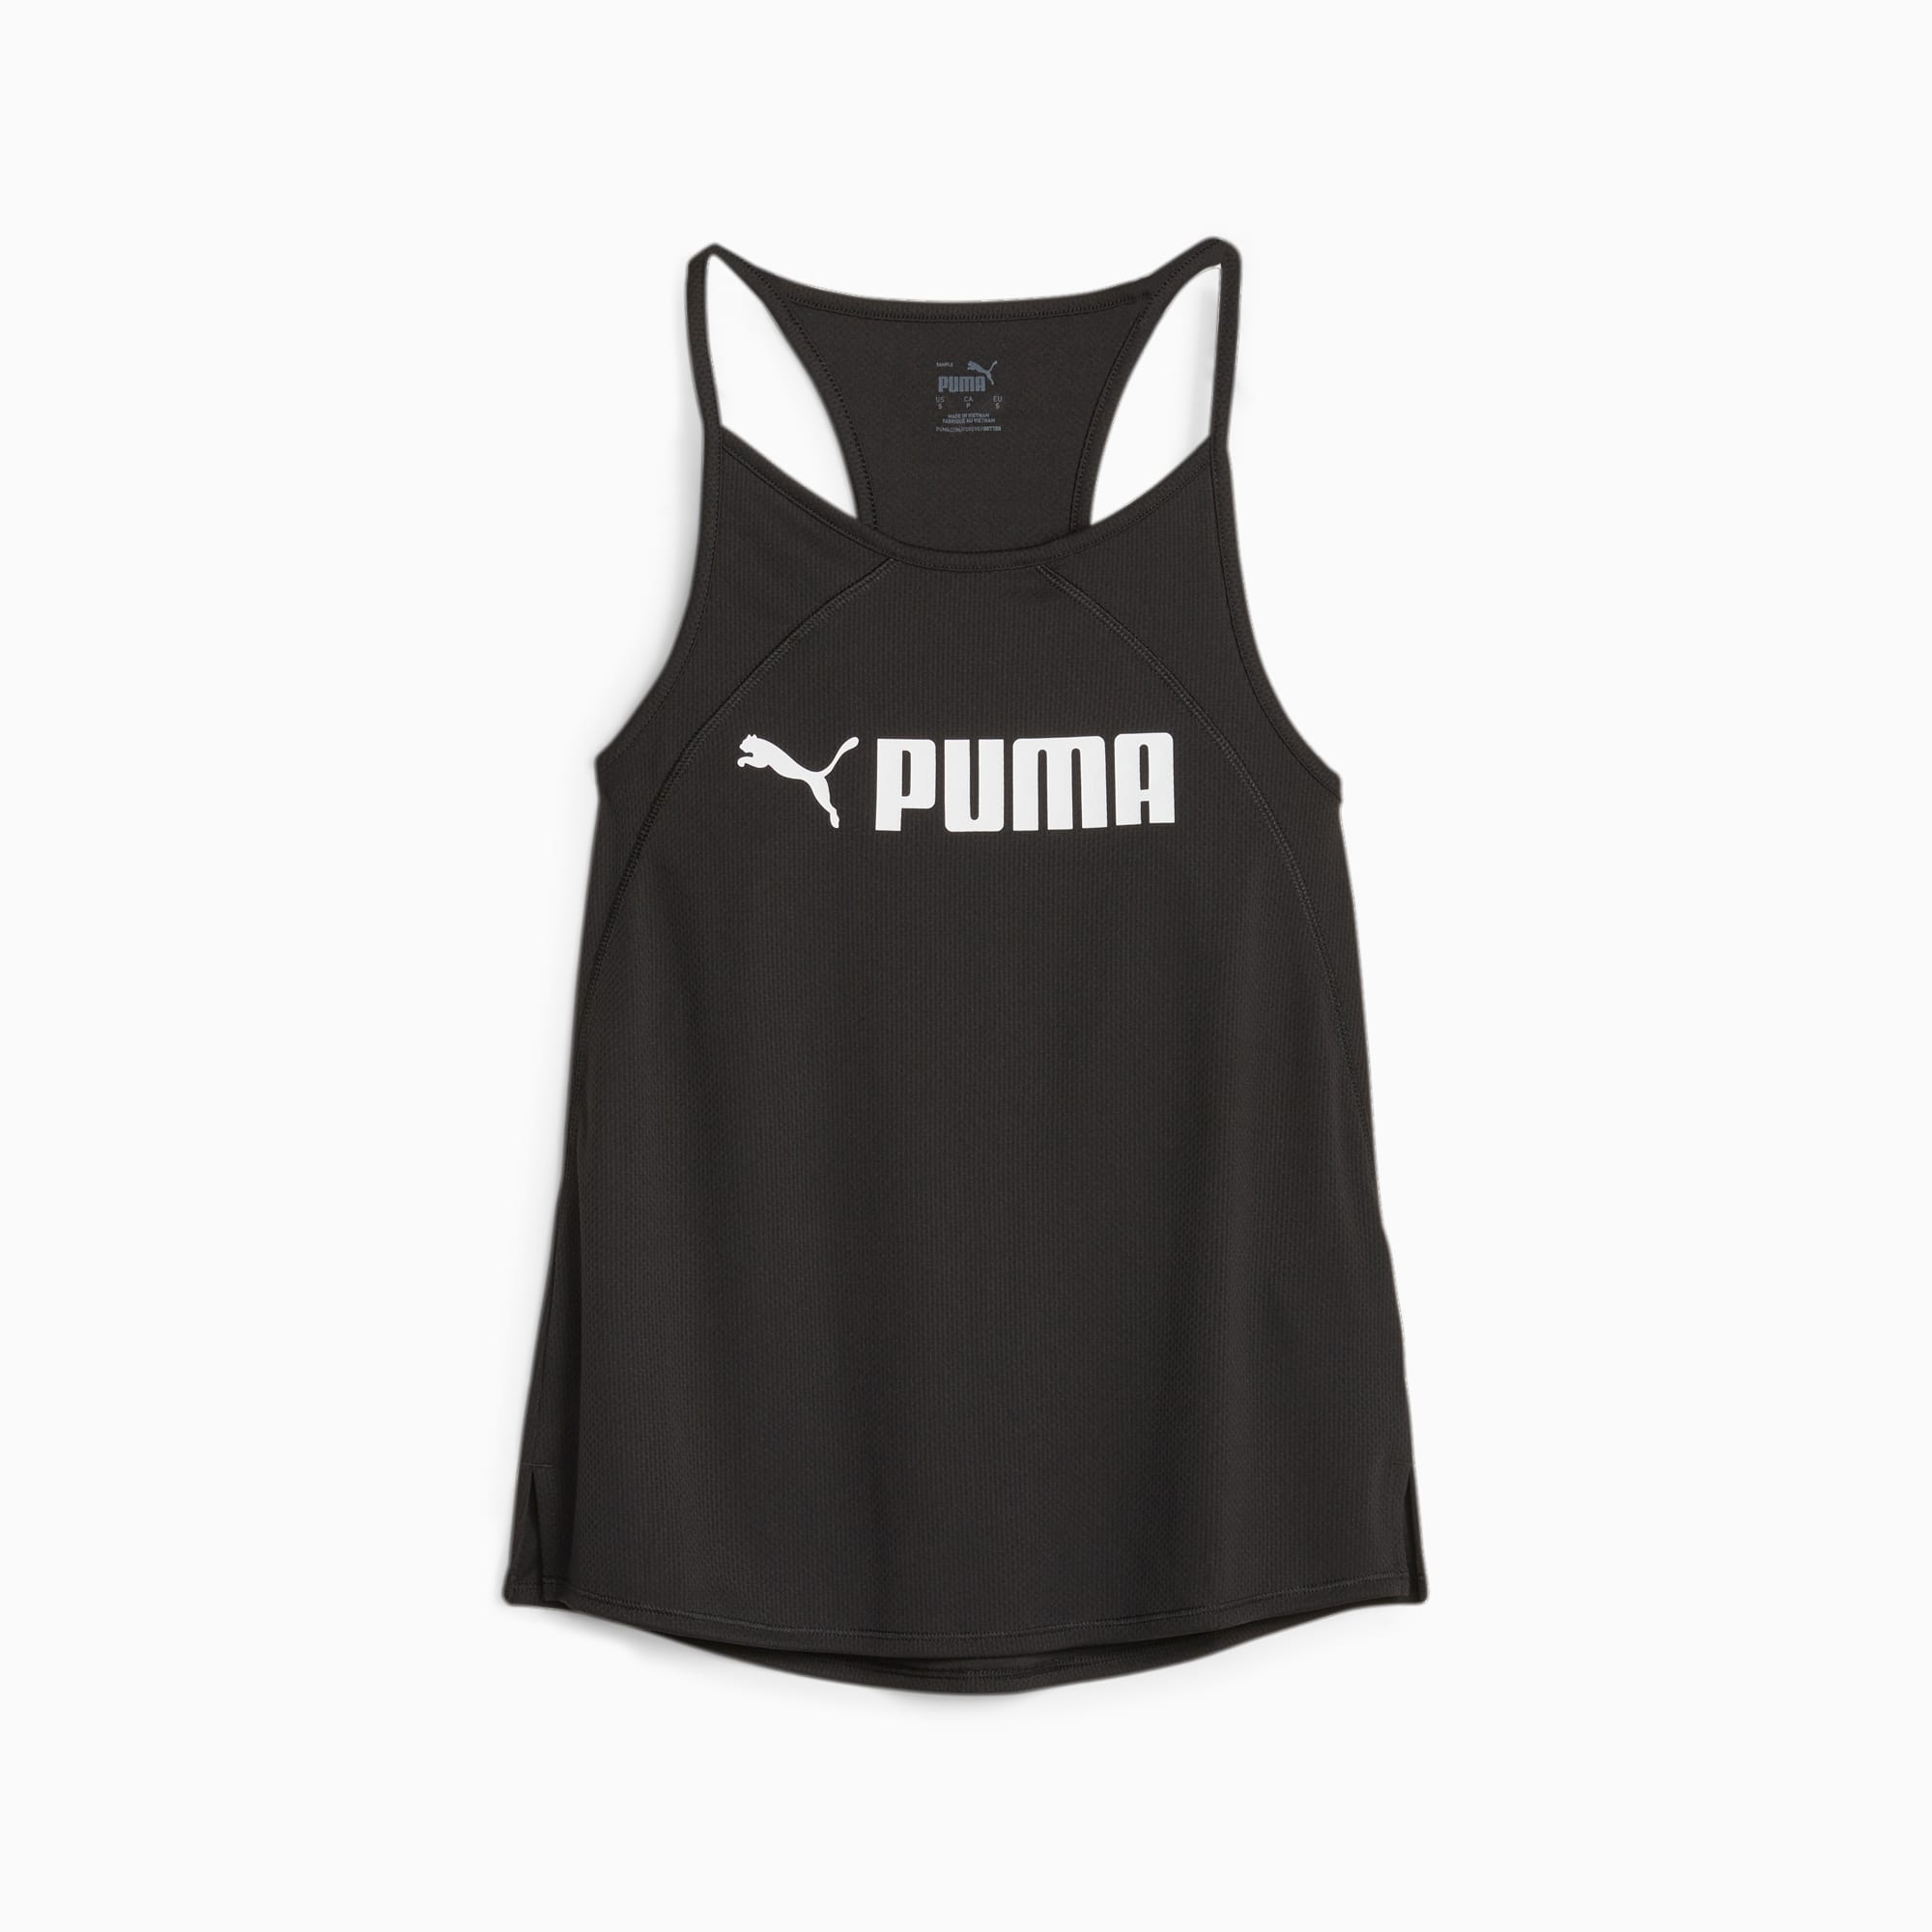 PUMA Fit Ultrabreathe Women's Tank Top Shirt, Black/White, Size XXS, Clothing